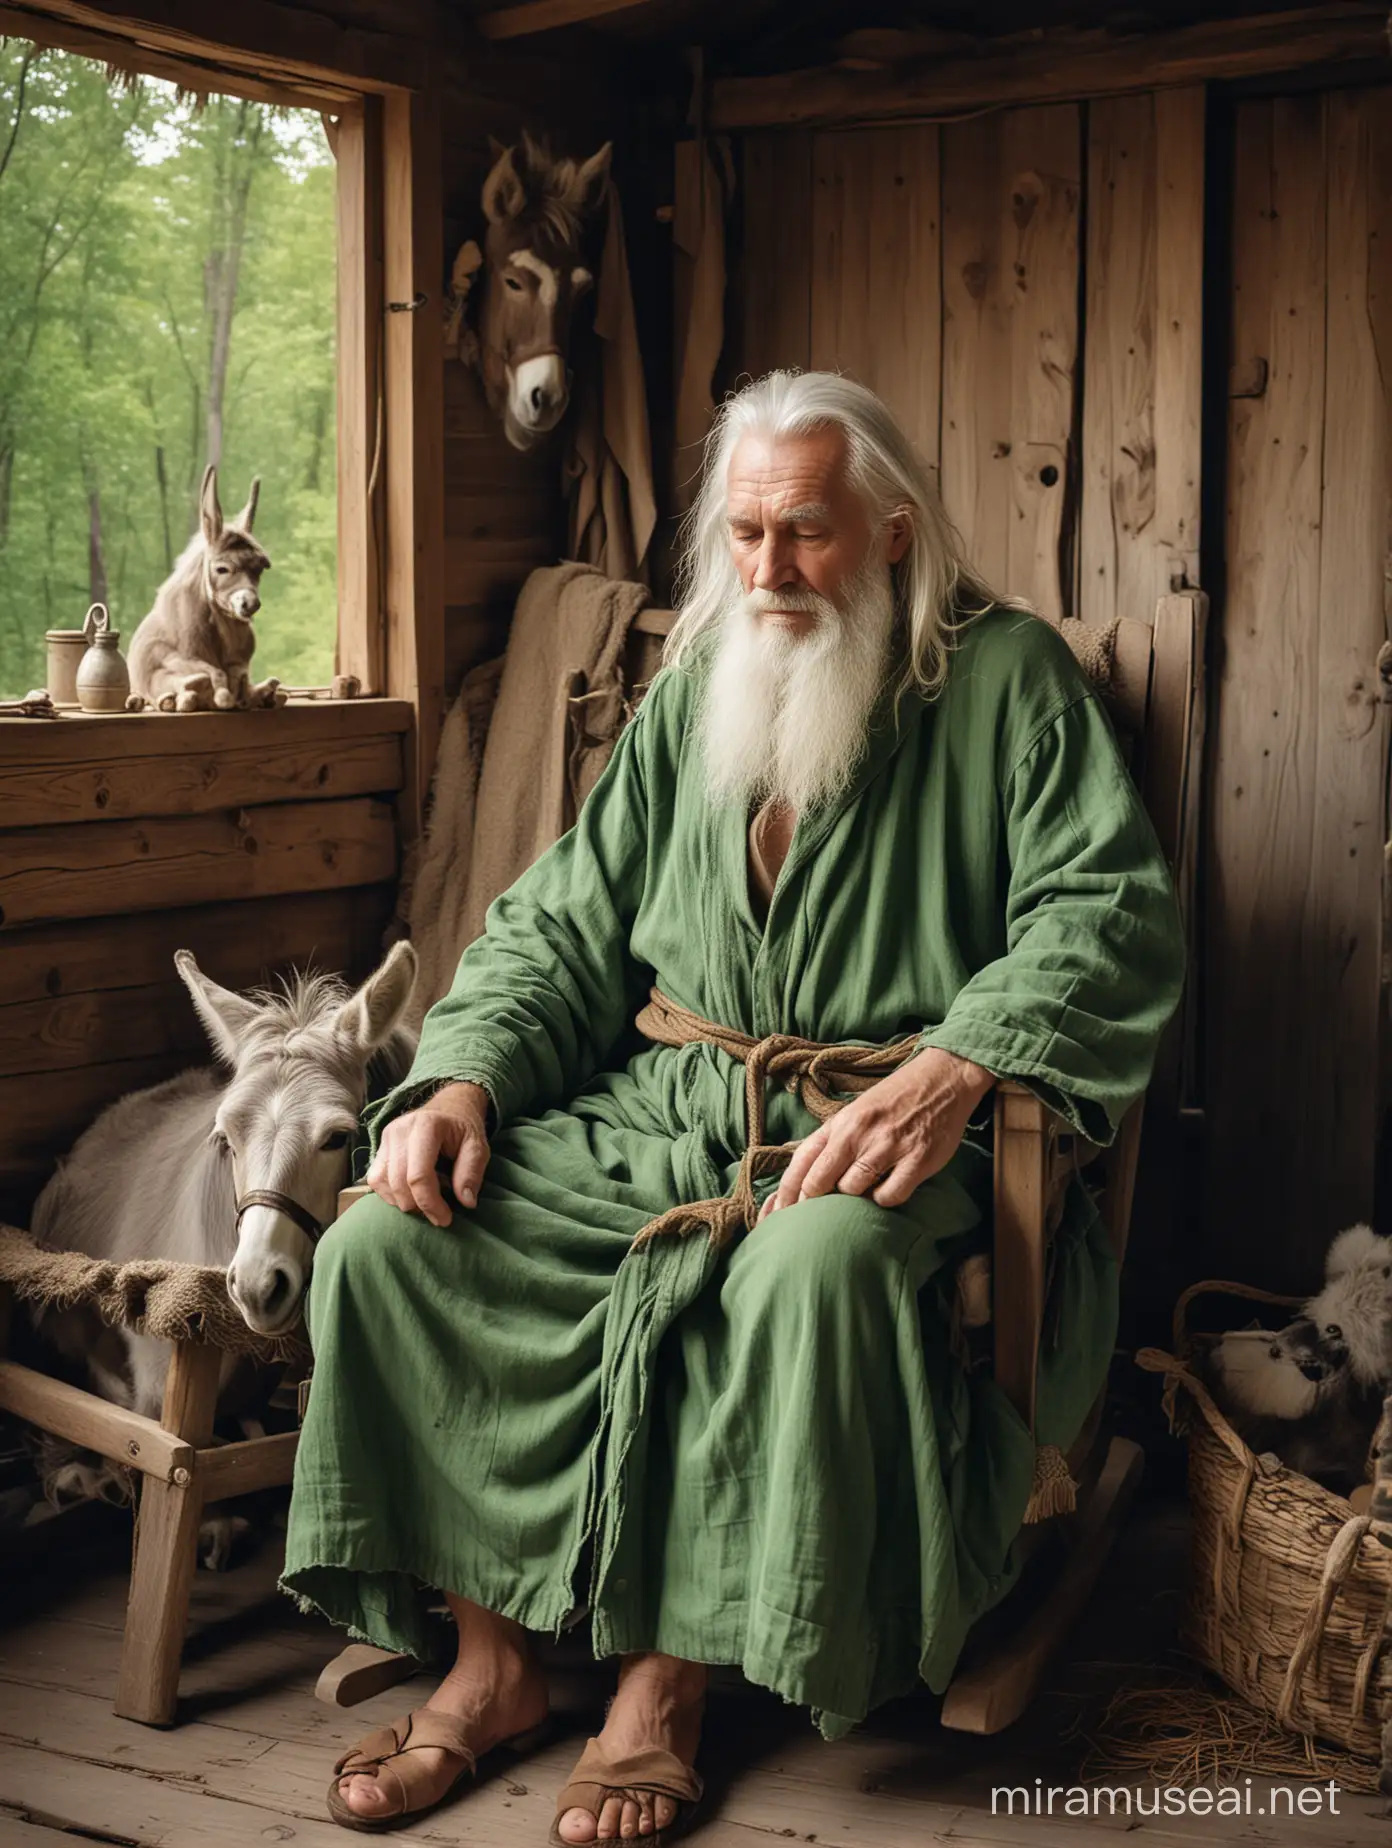 Elderly Hermit Resting with Trusty Donkey in Forest Cabin